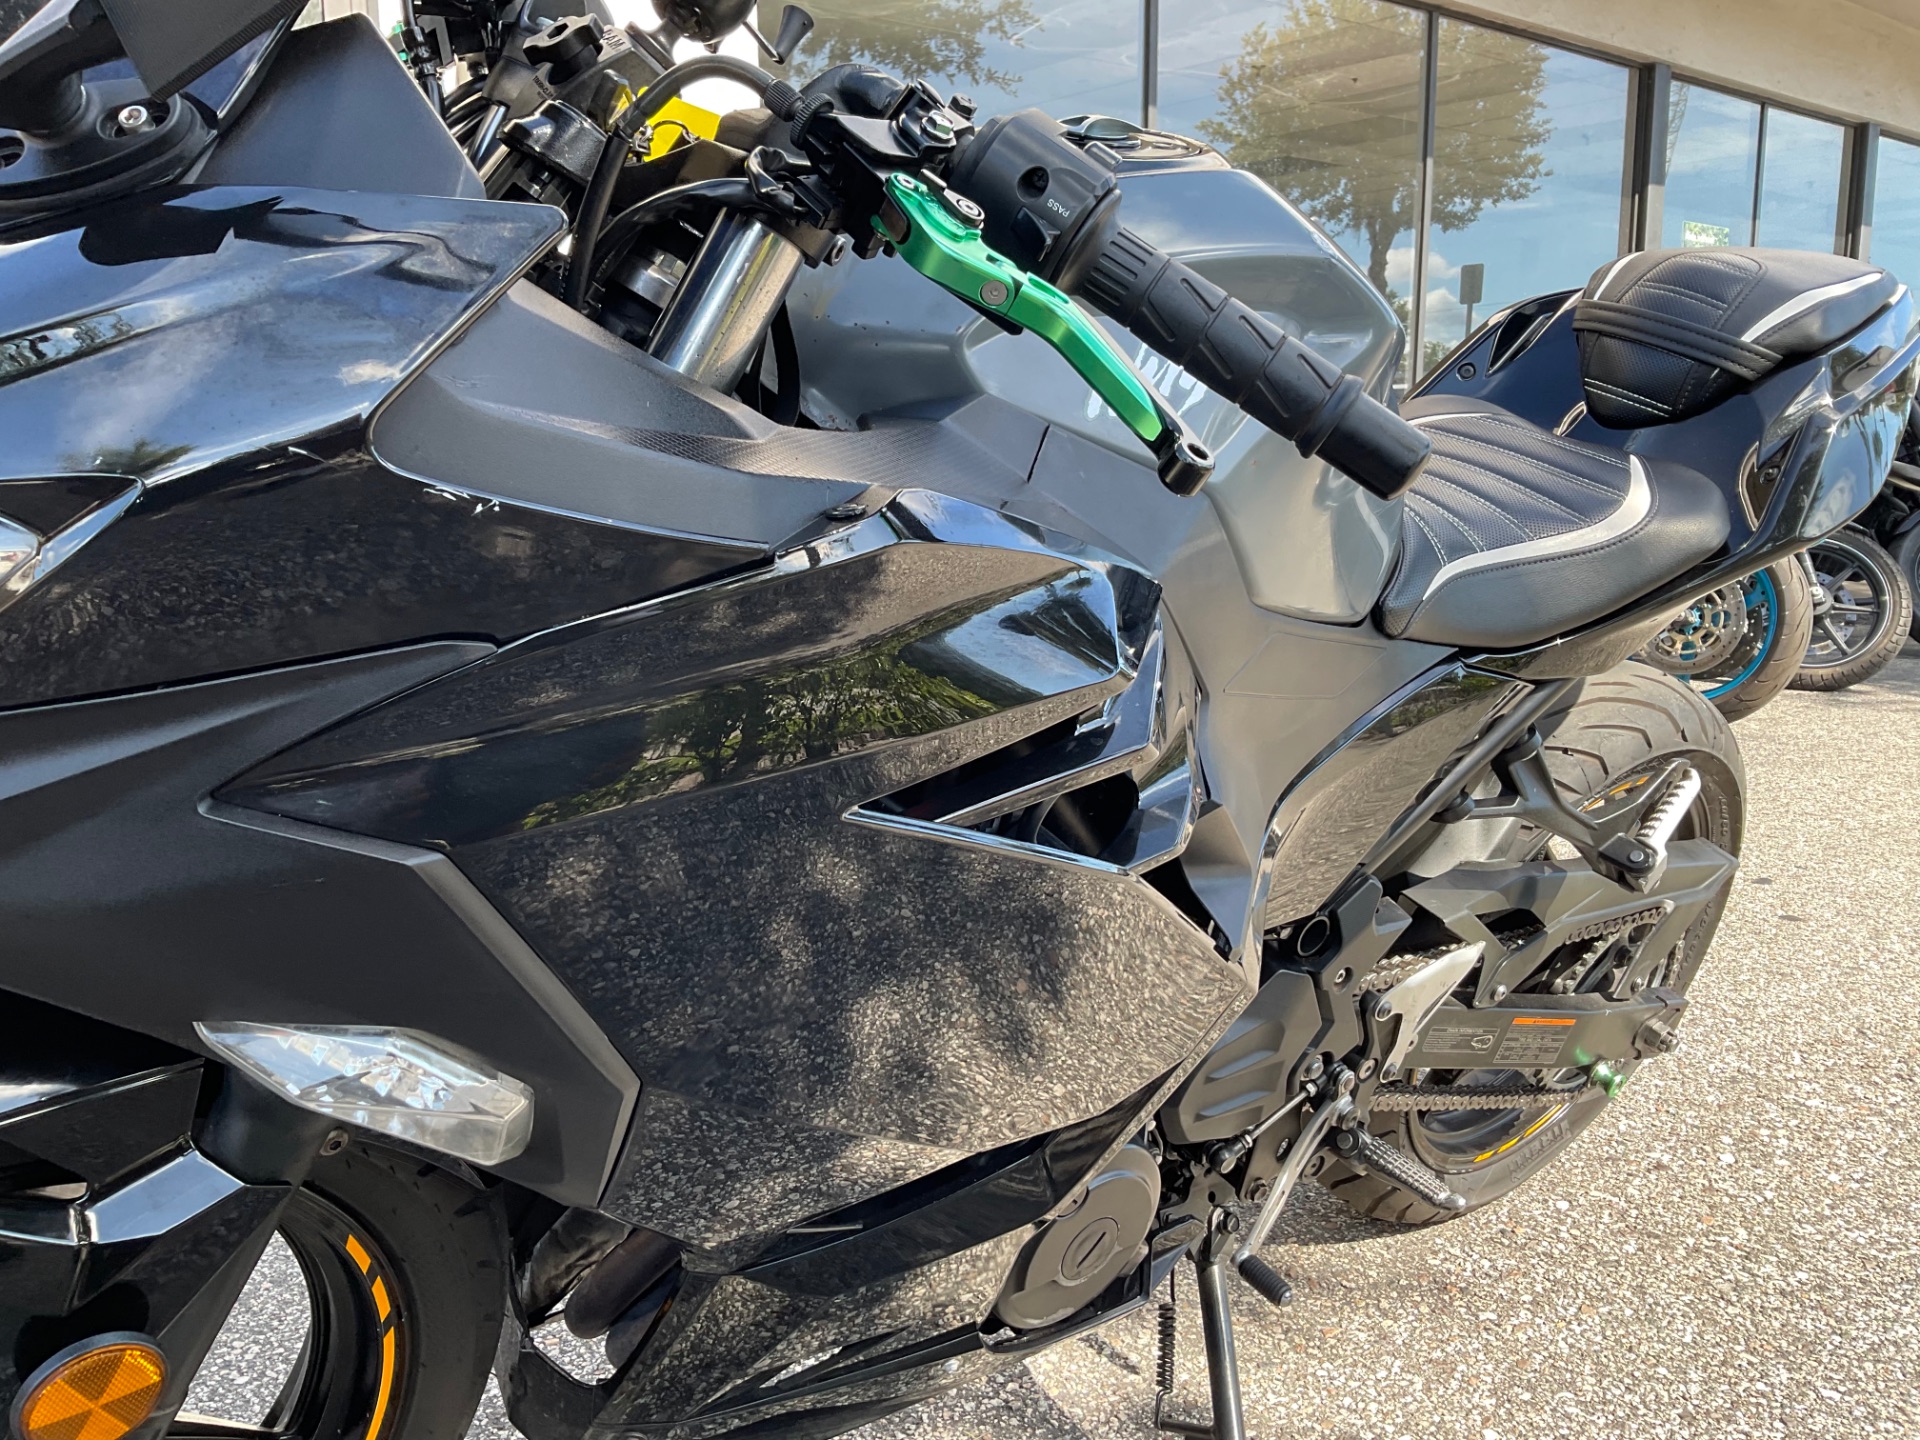 2018 Kawasaki Ninja 400 ABS in Sanford, Florida - Photo 13